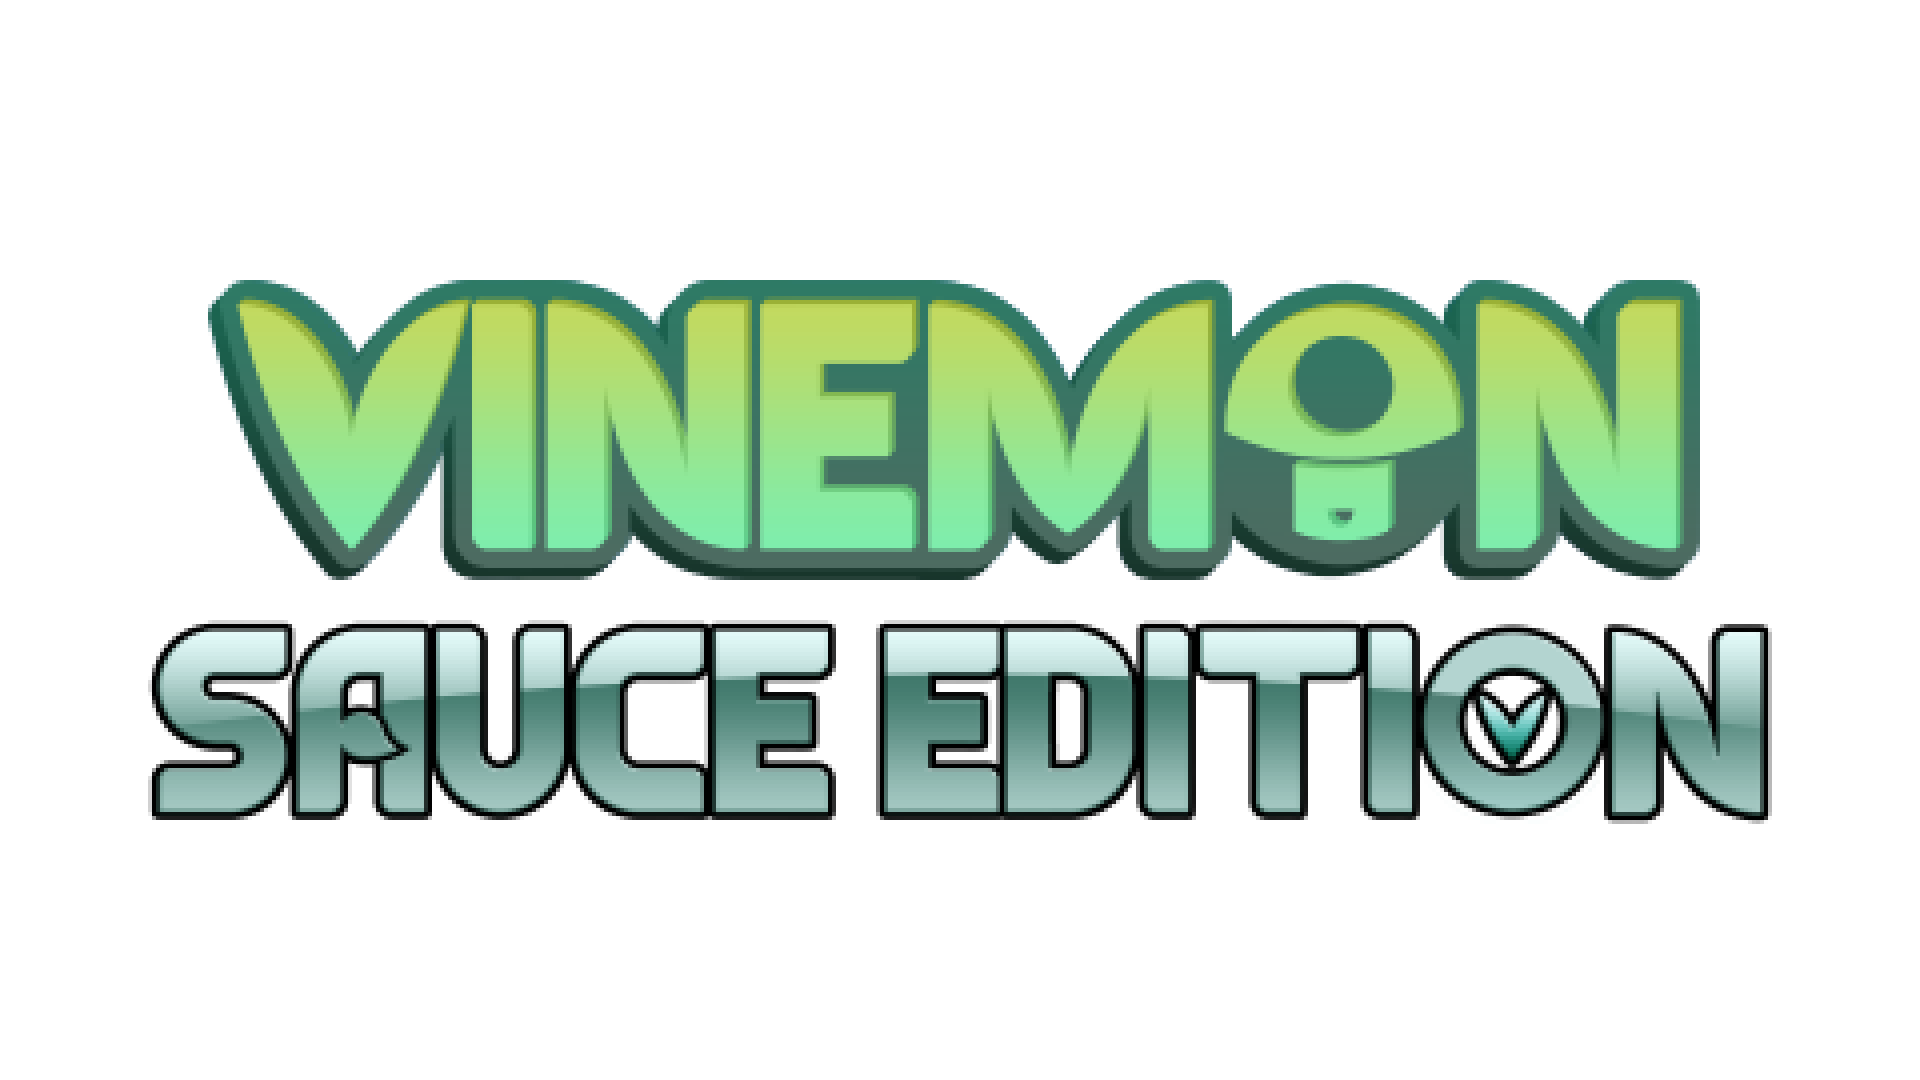 Vinemon: Sauce Edition Logo